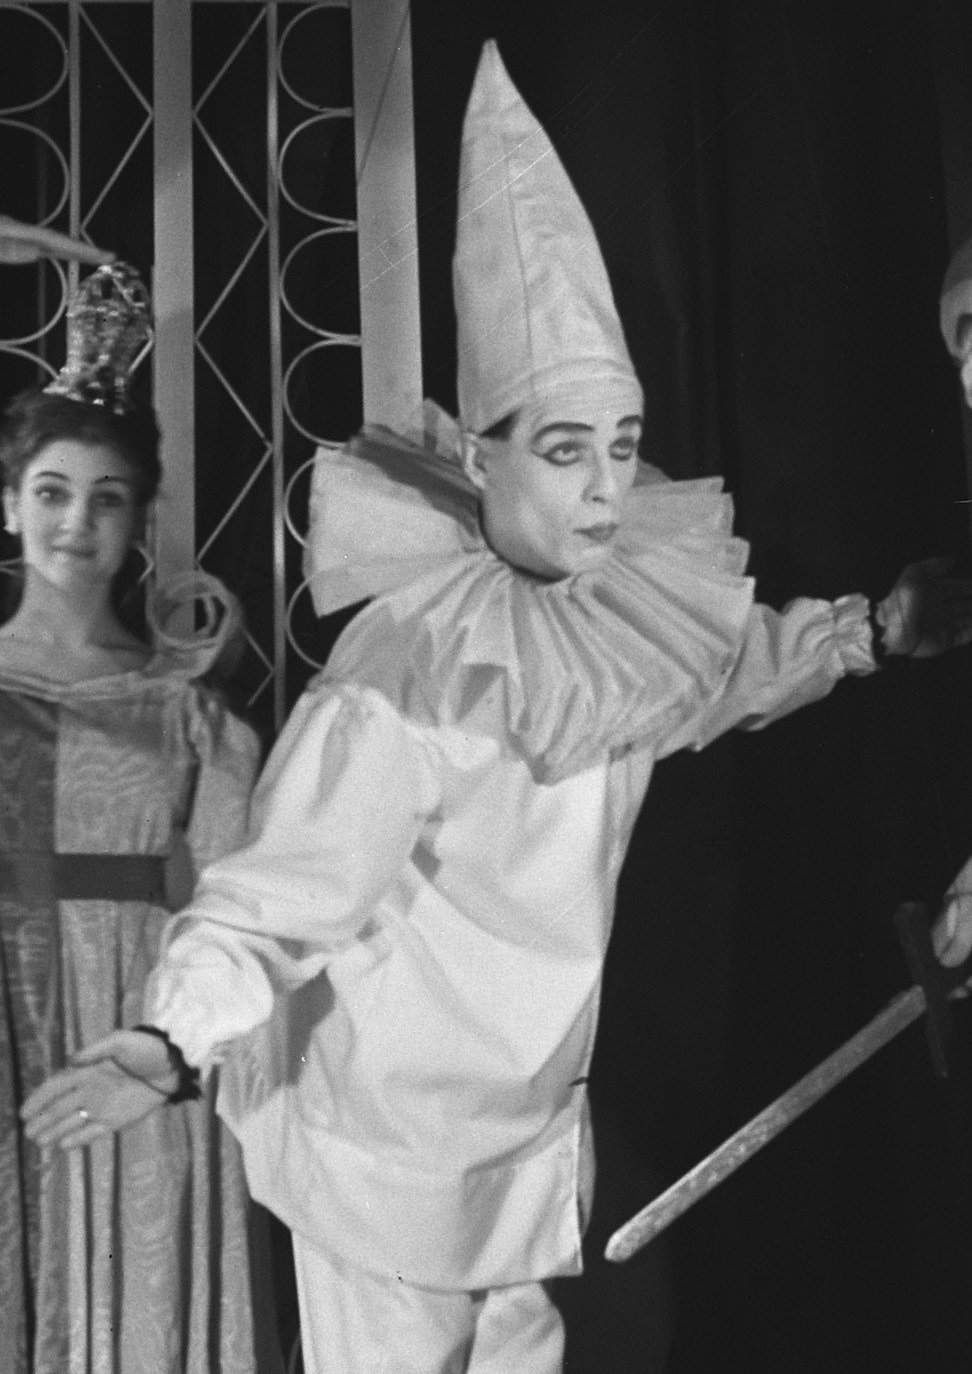 Als ik koning was bij Puck in de Kleine Komedie - Jaap Maarleveld (Pierrot) - 904-3425 (cropped).jpg